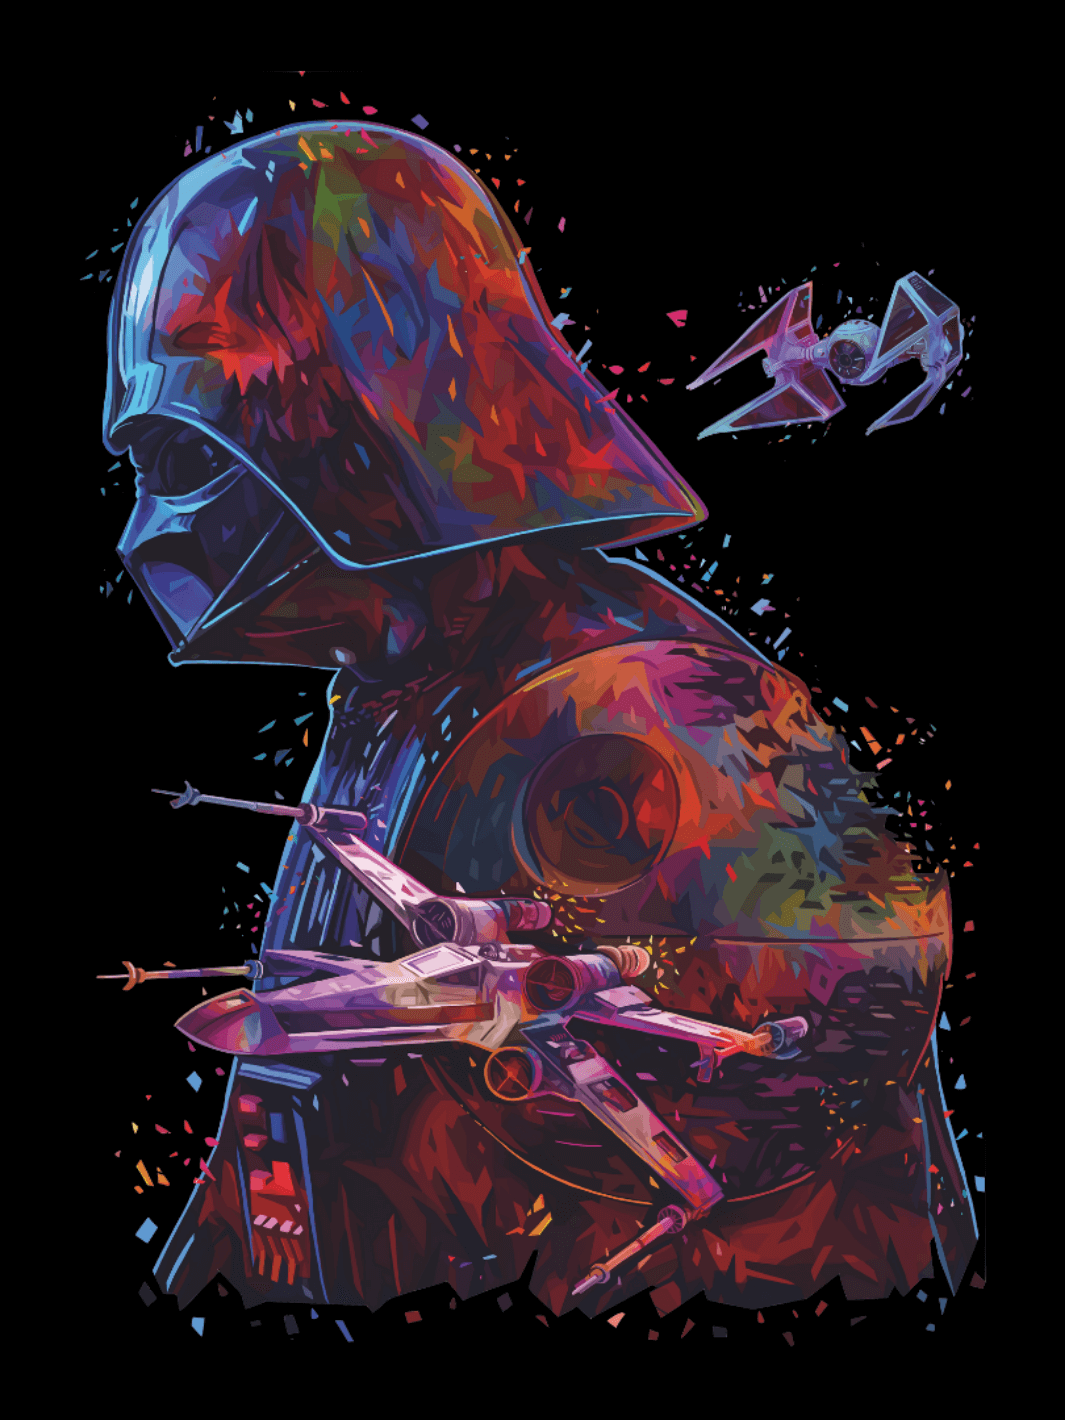 Grafica Star Wars by Alessandro Pautasso.